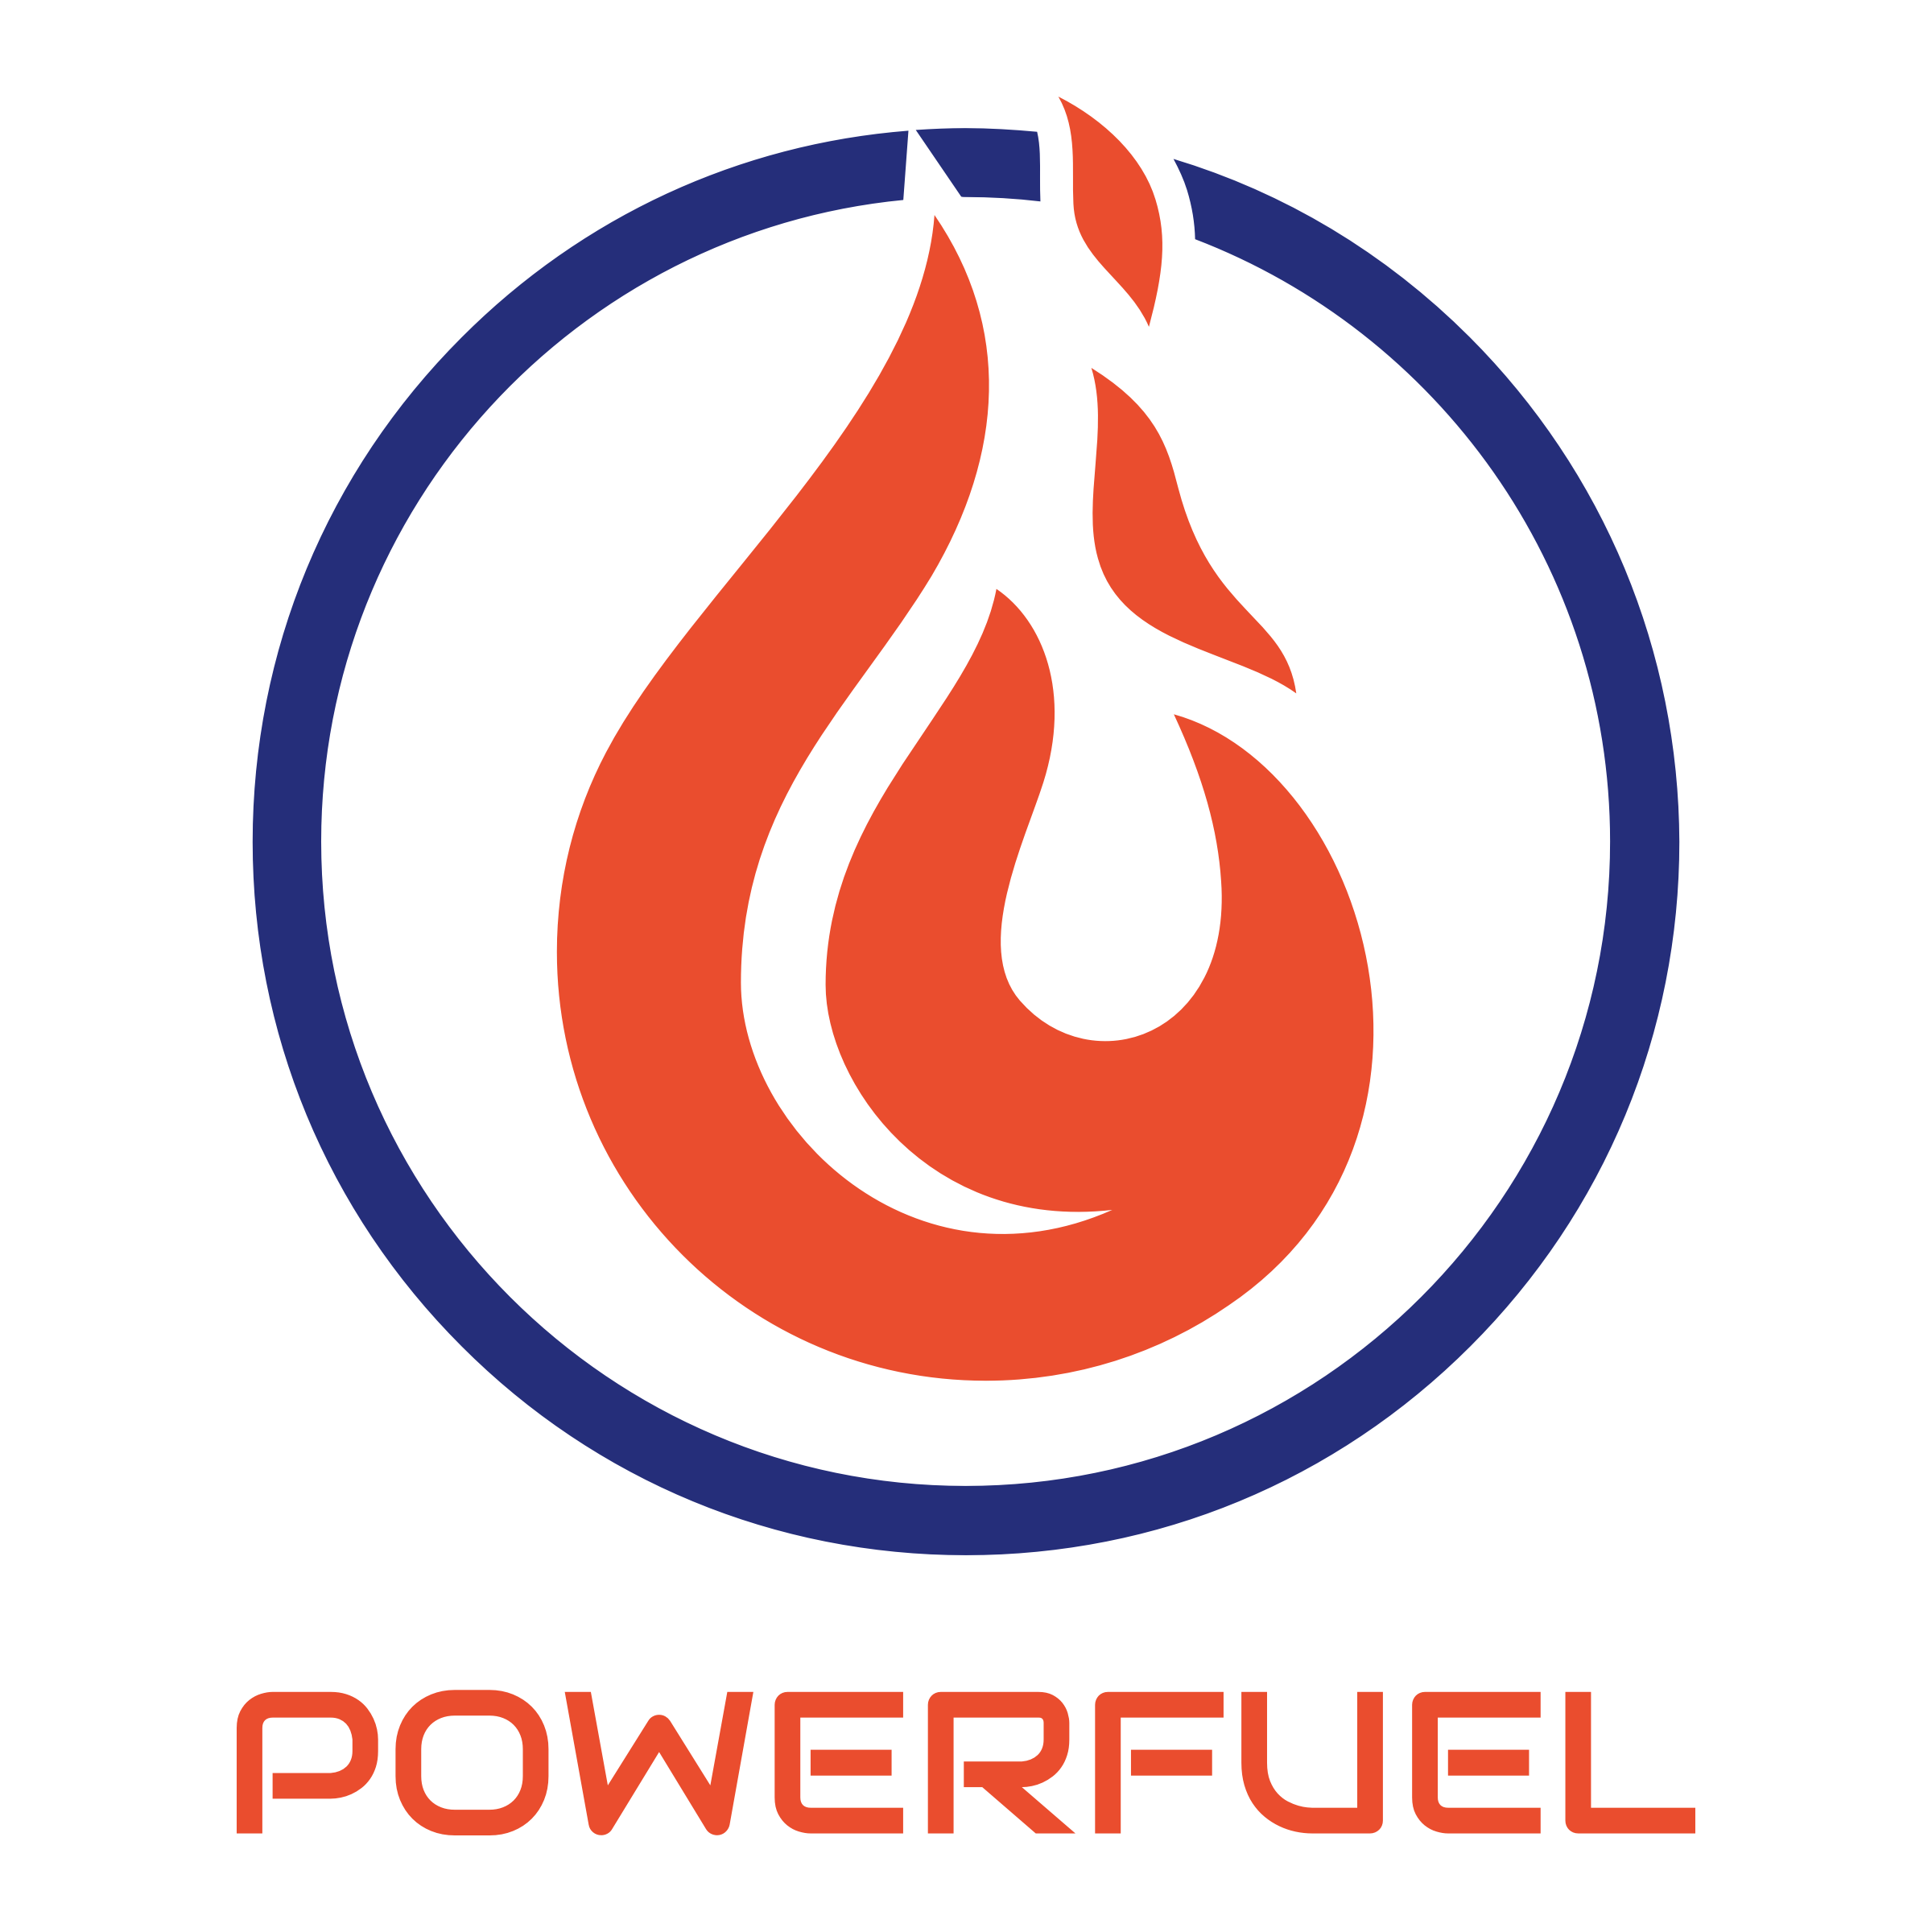 gas station logo design